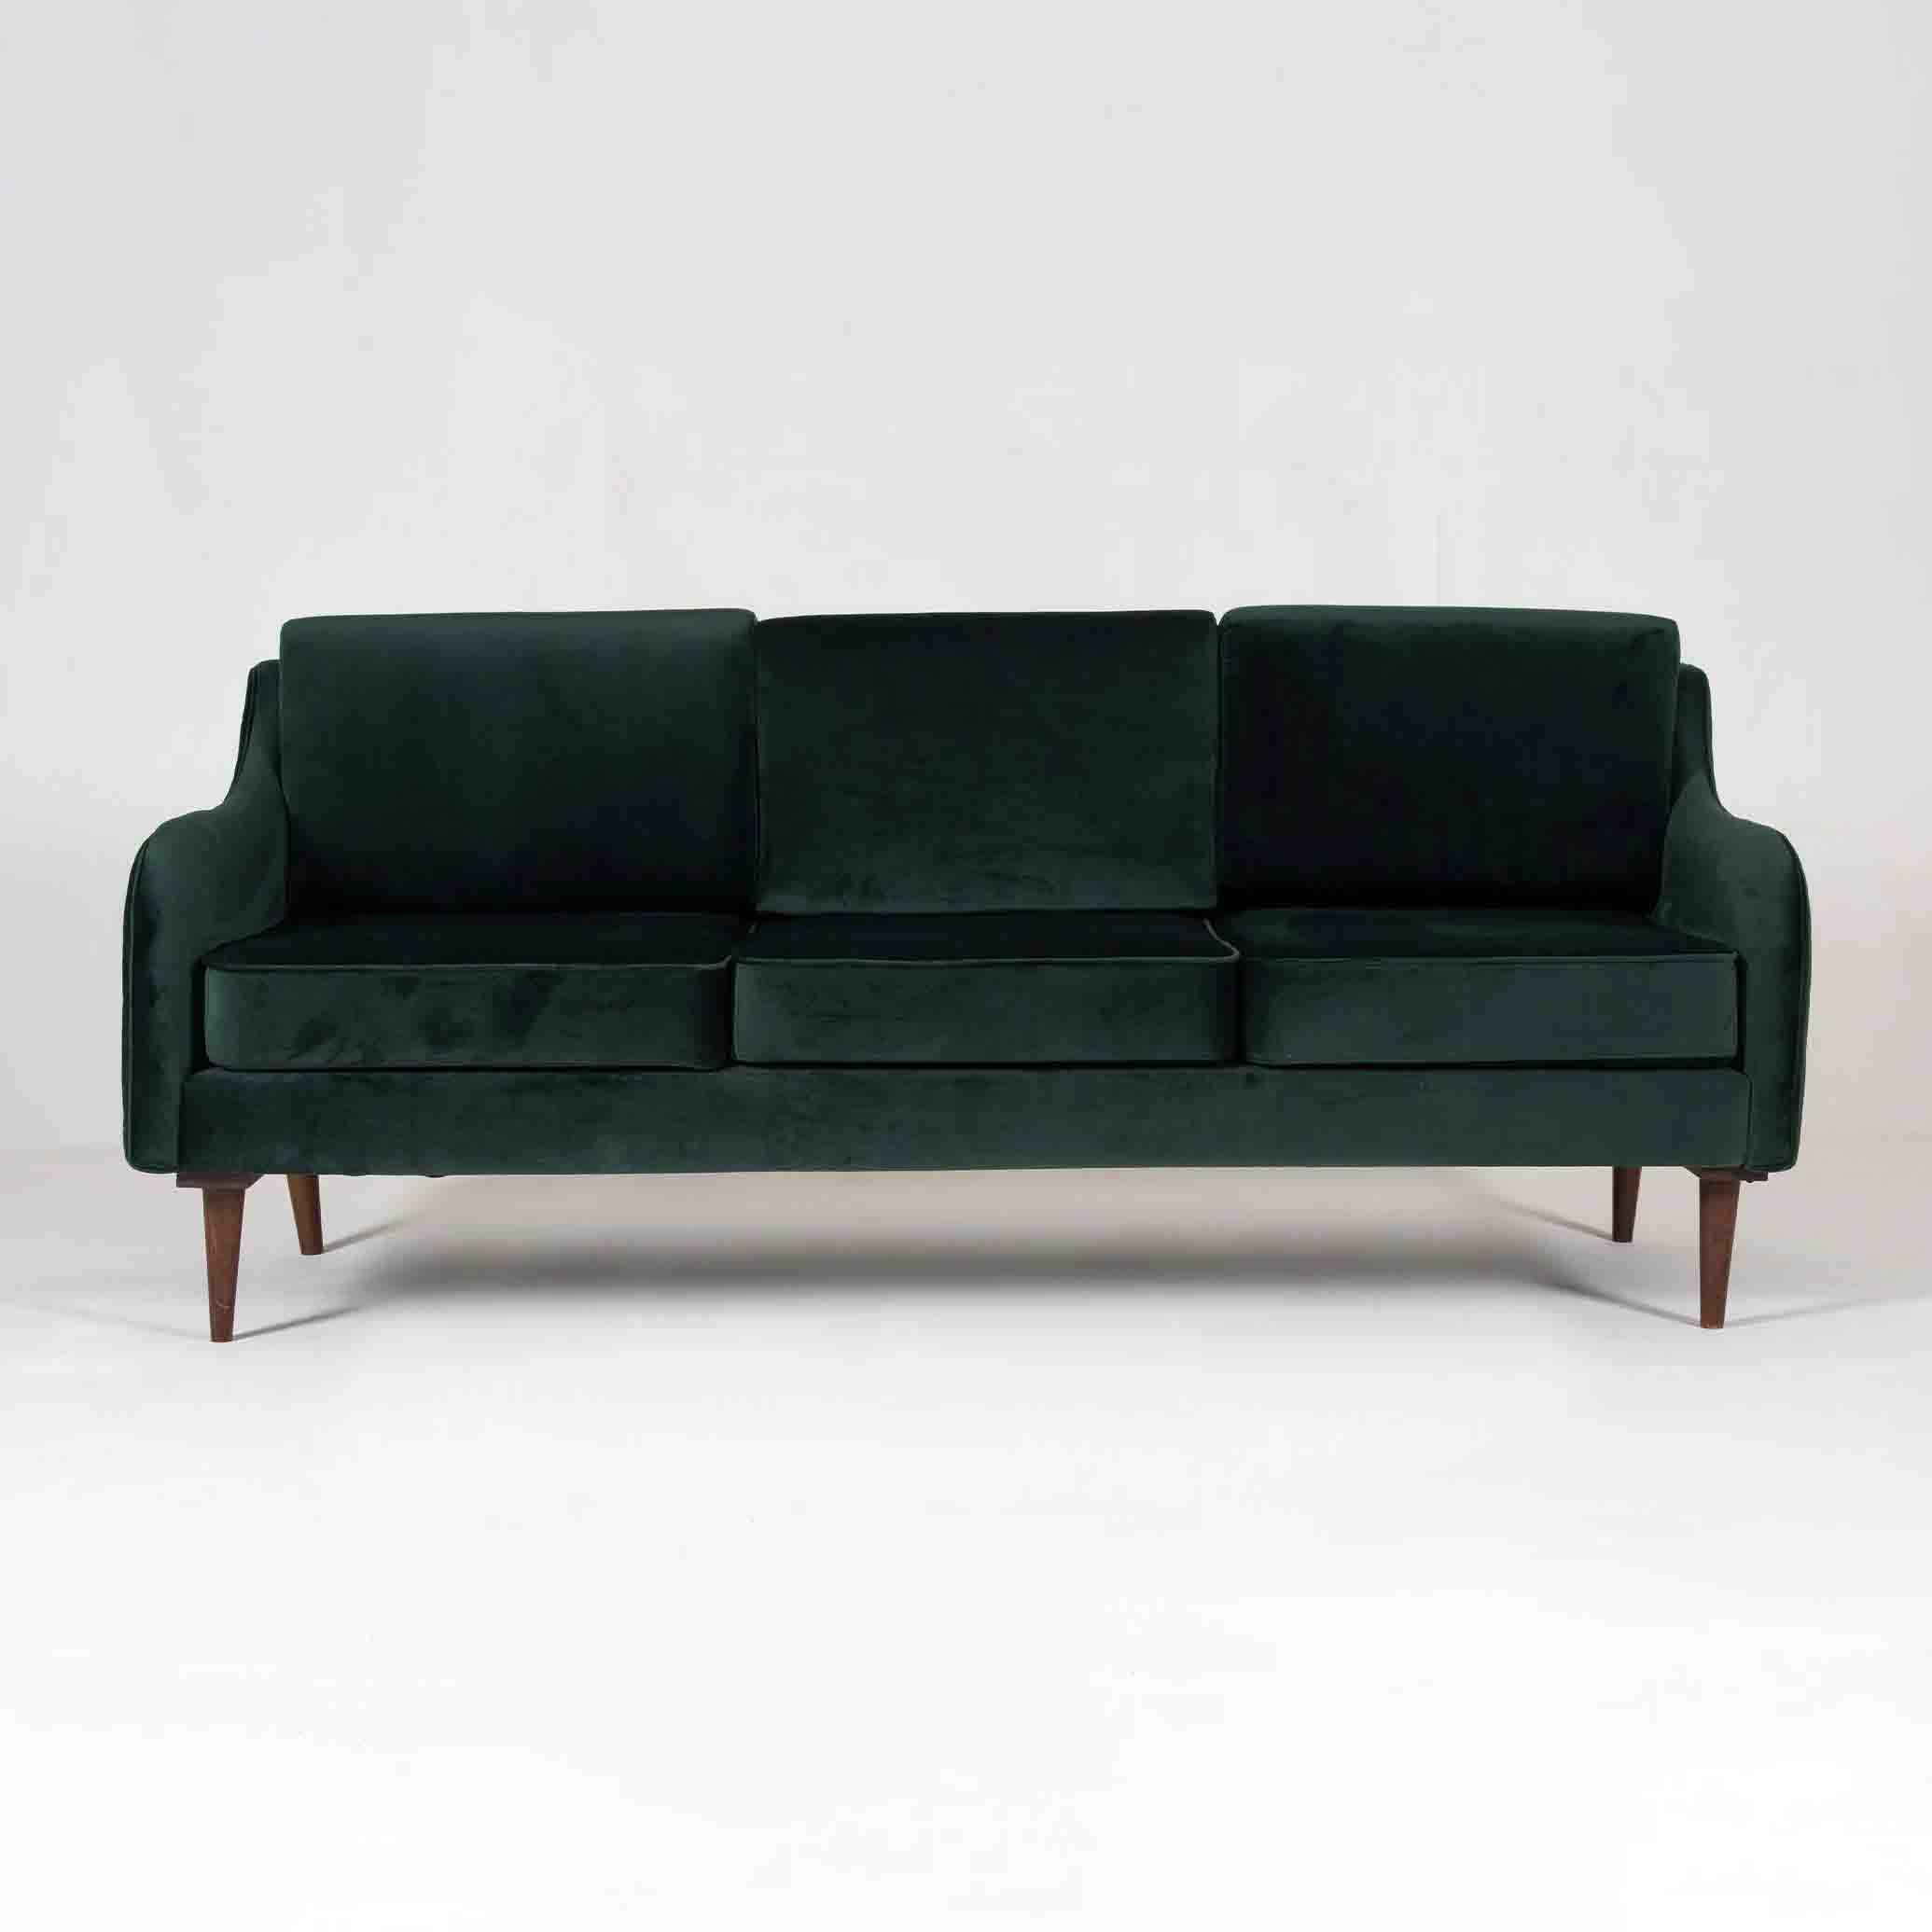 Yuki Single Seater Sofa